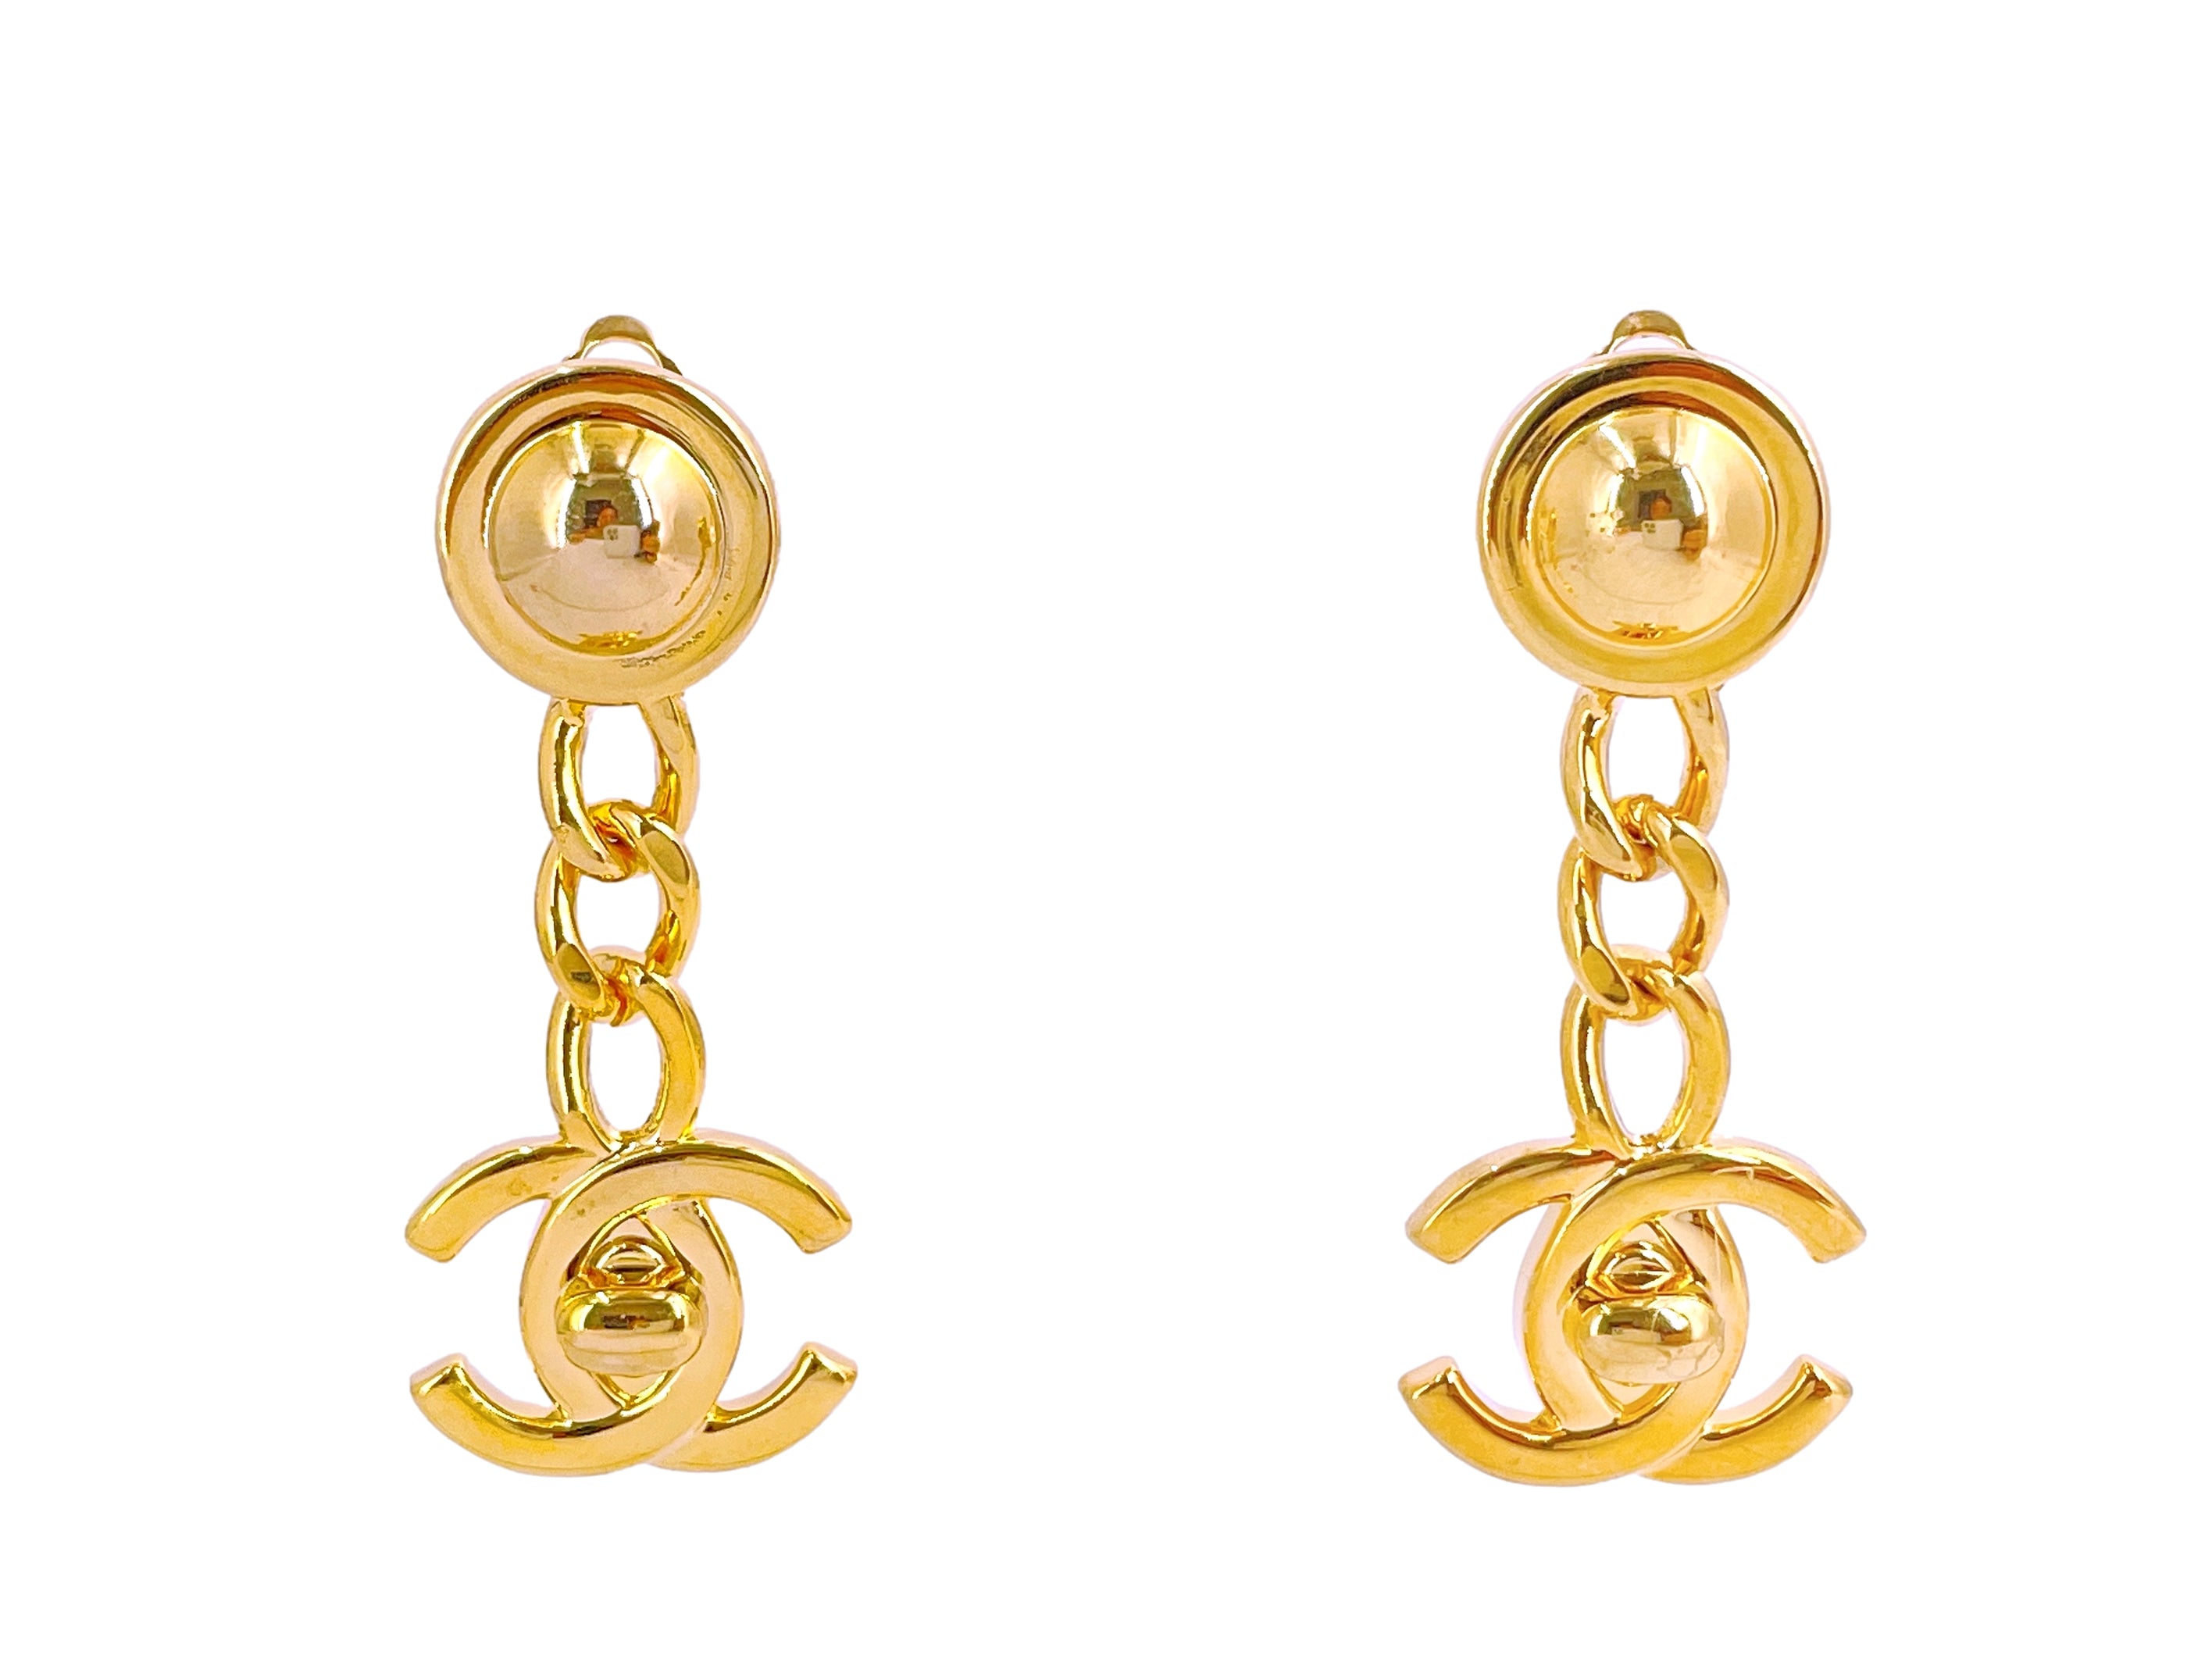 pearl drop chanel earrings vintage